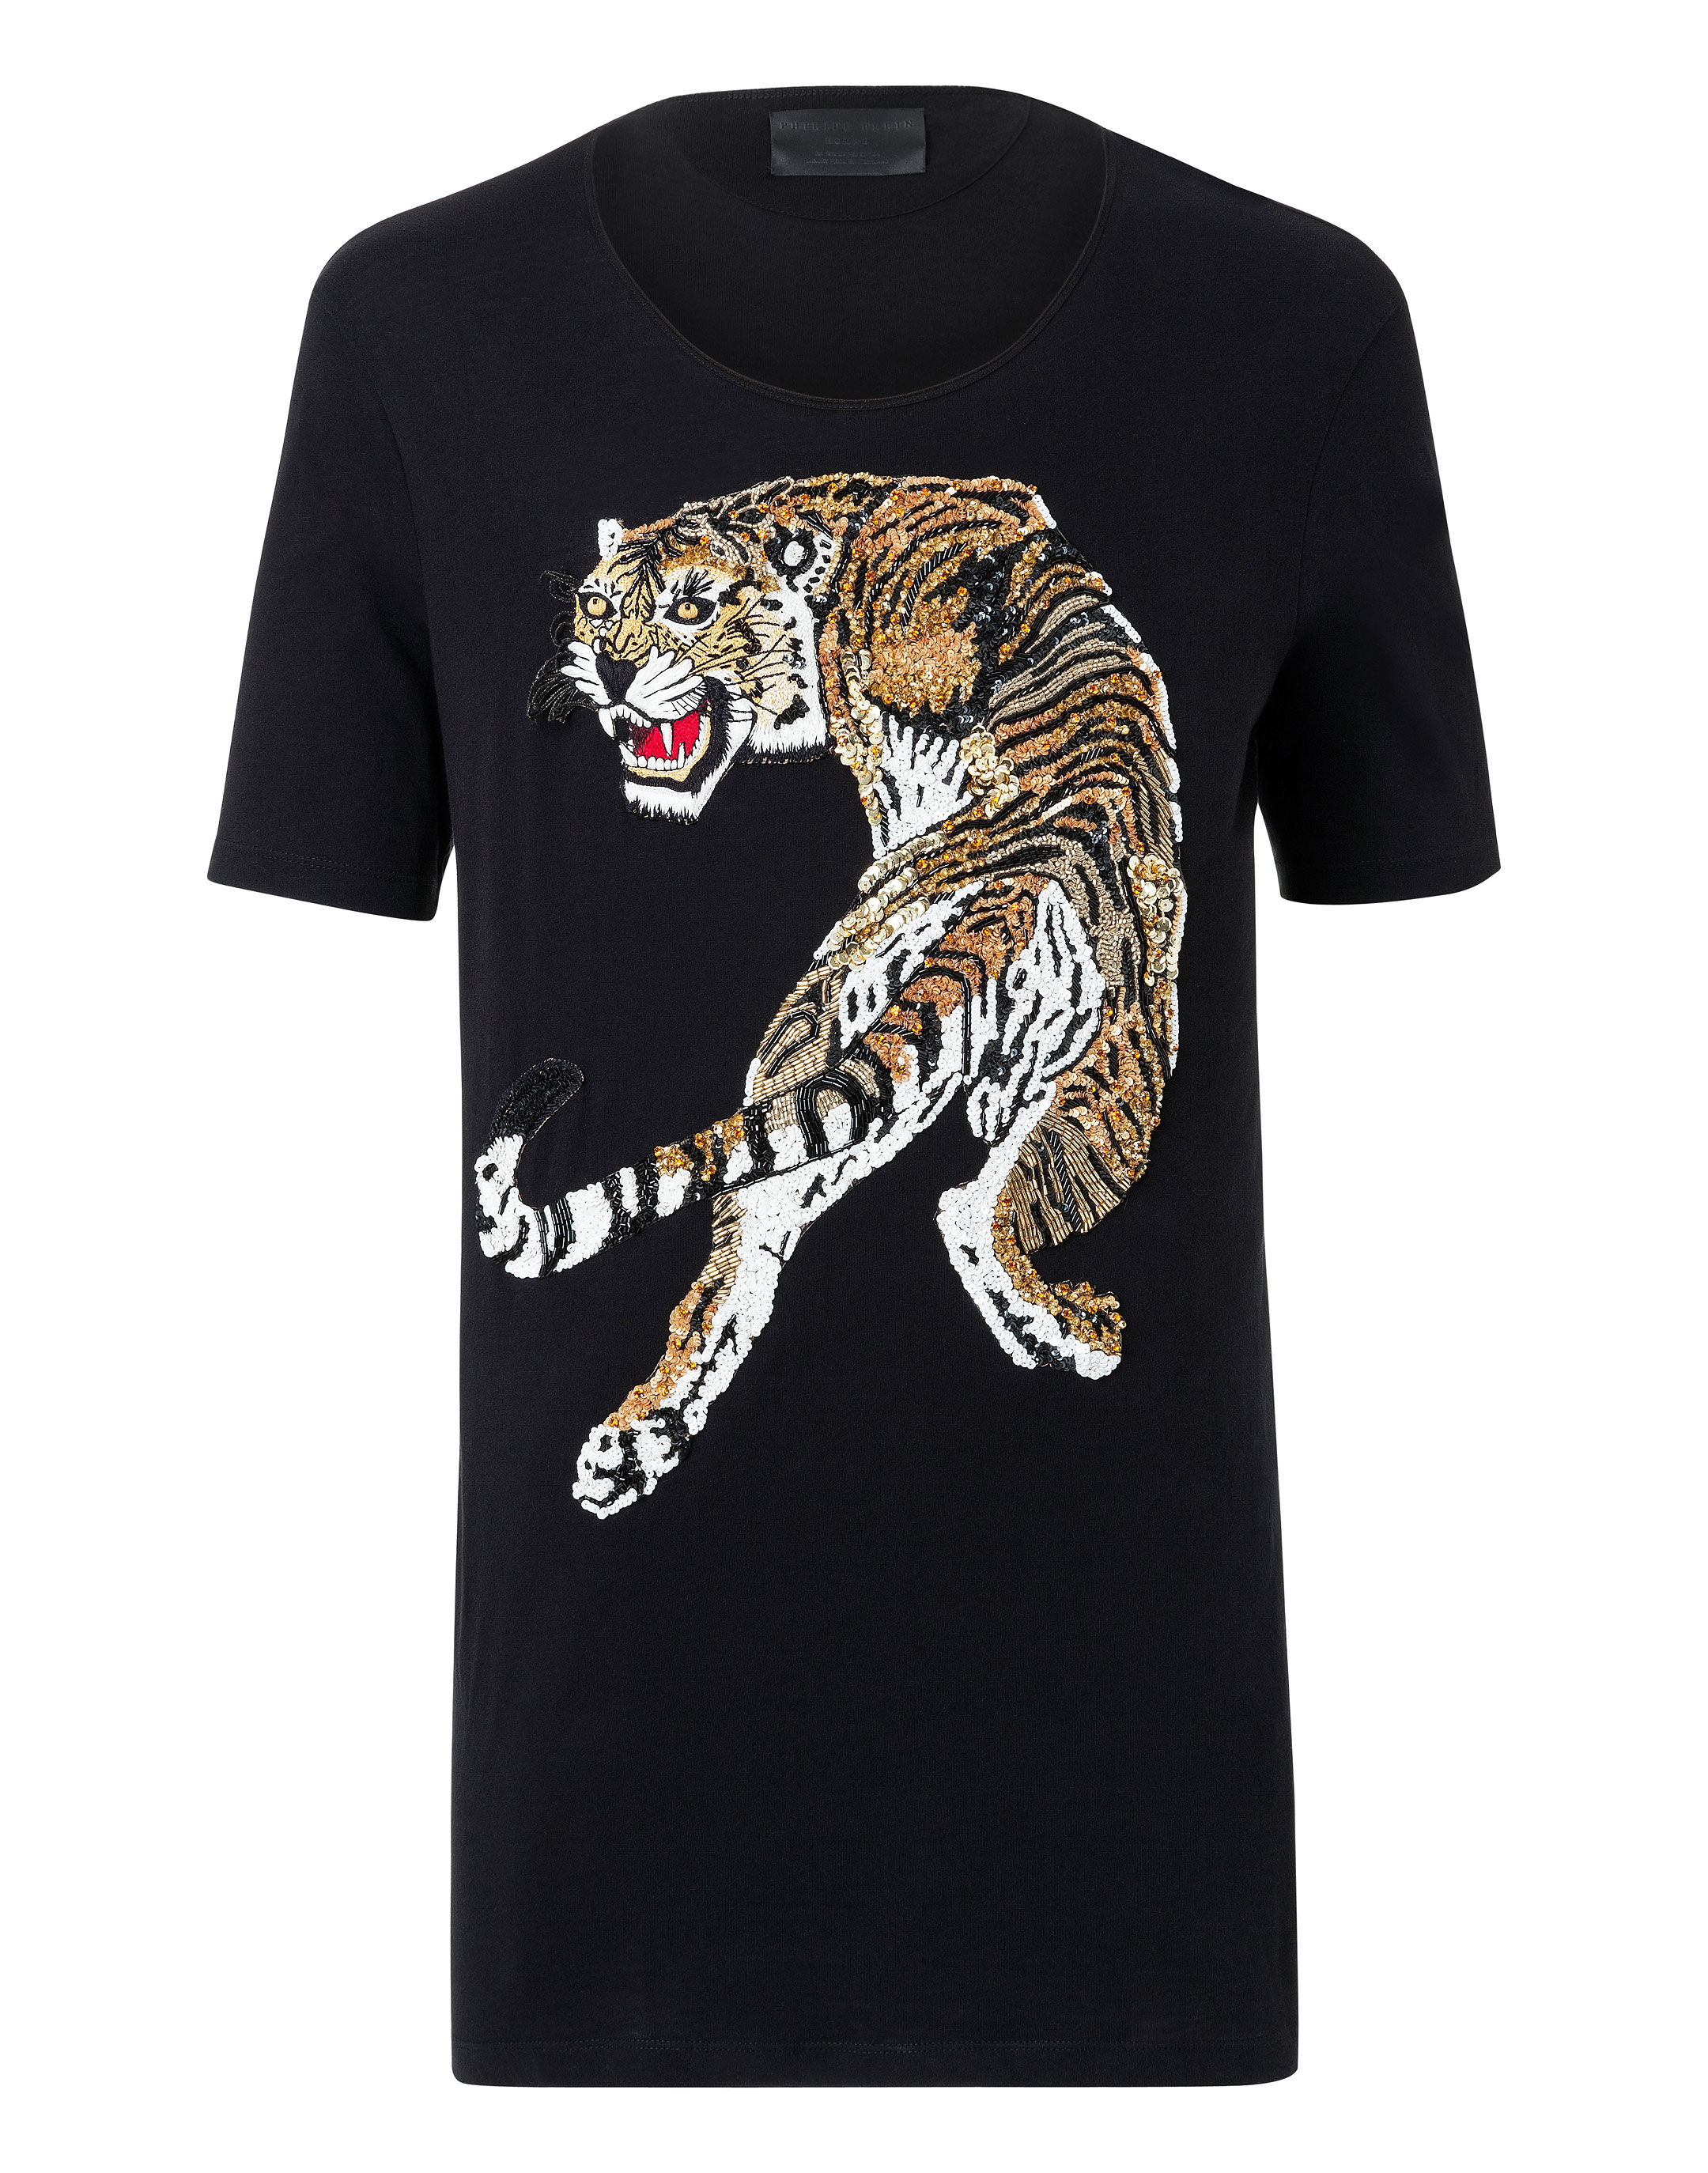 tiger of sweden shirts price